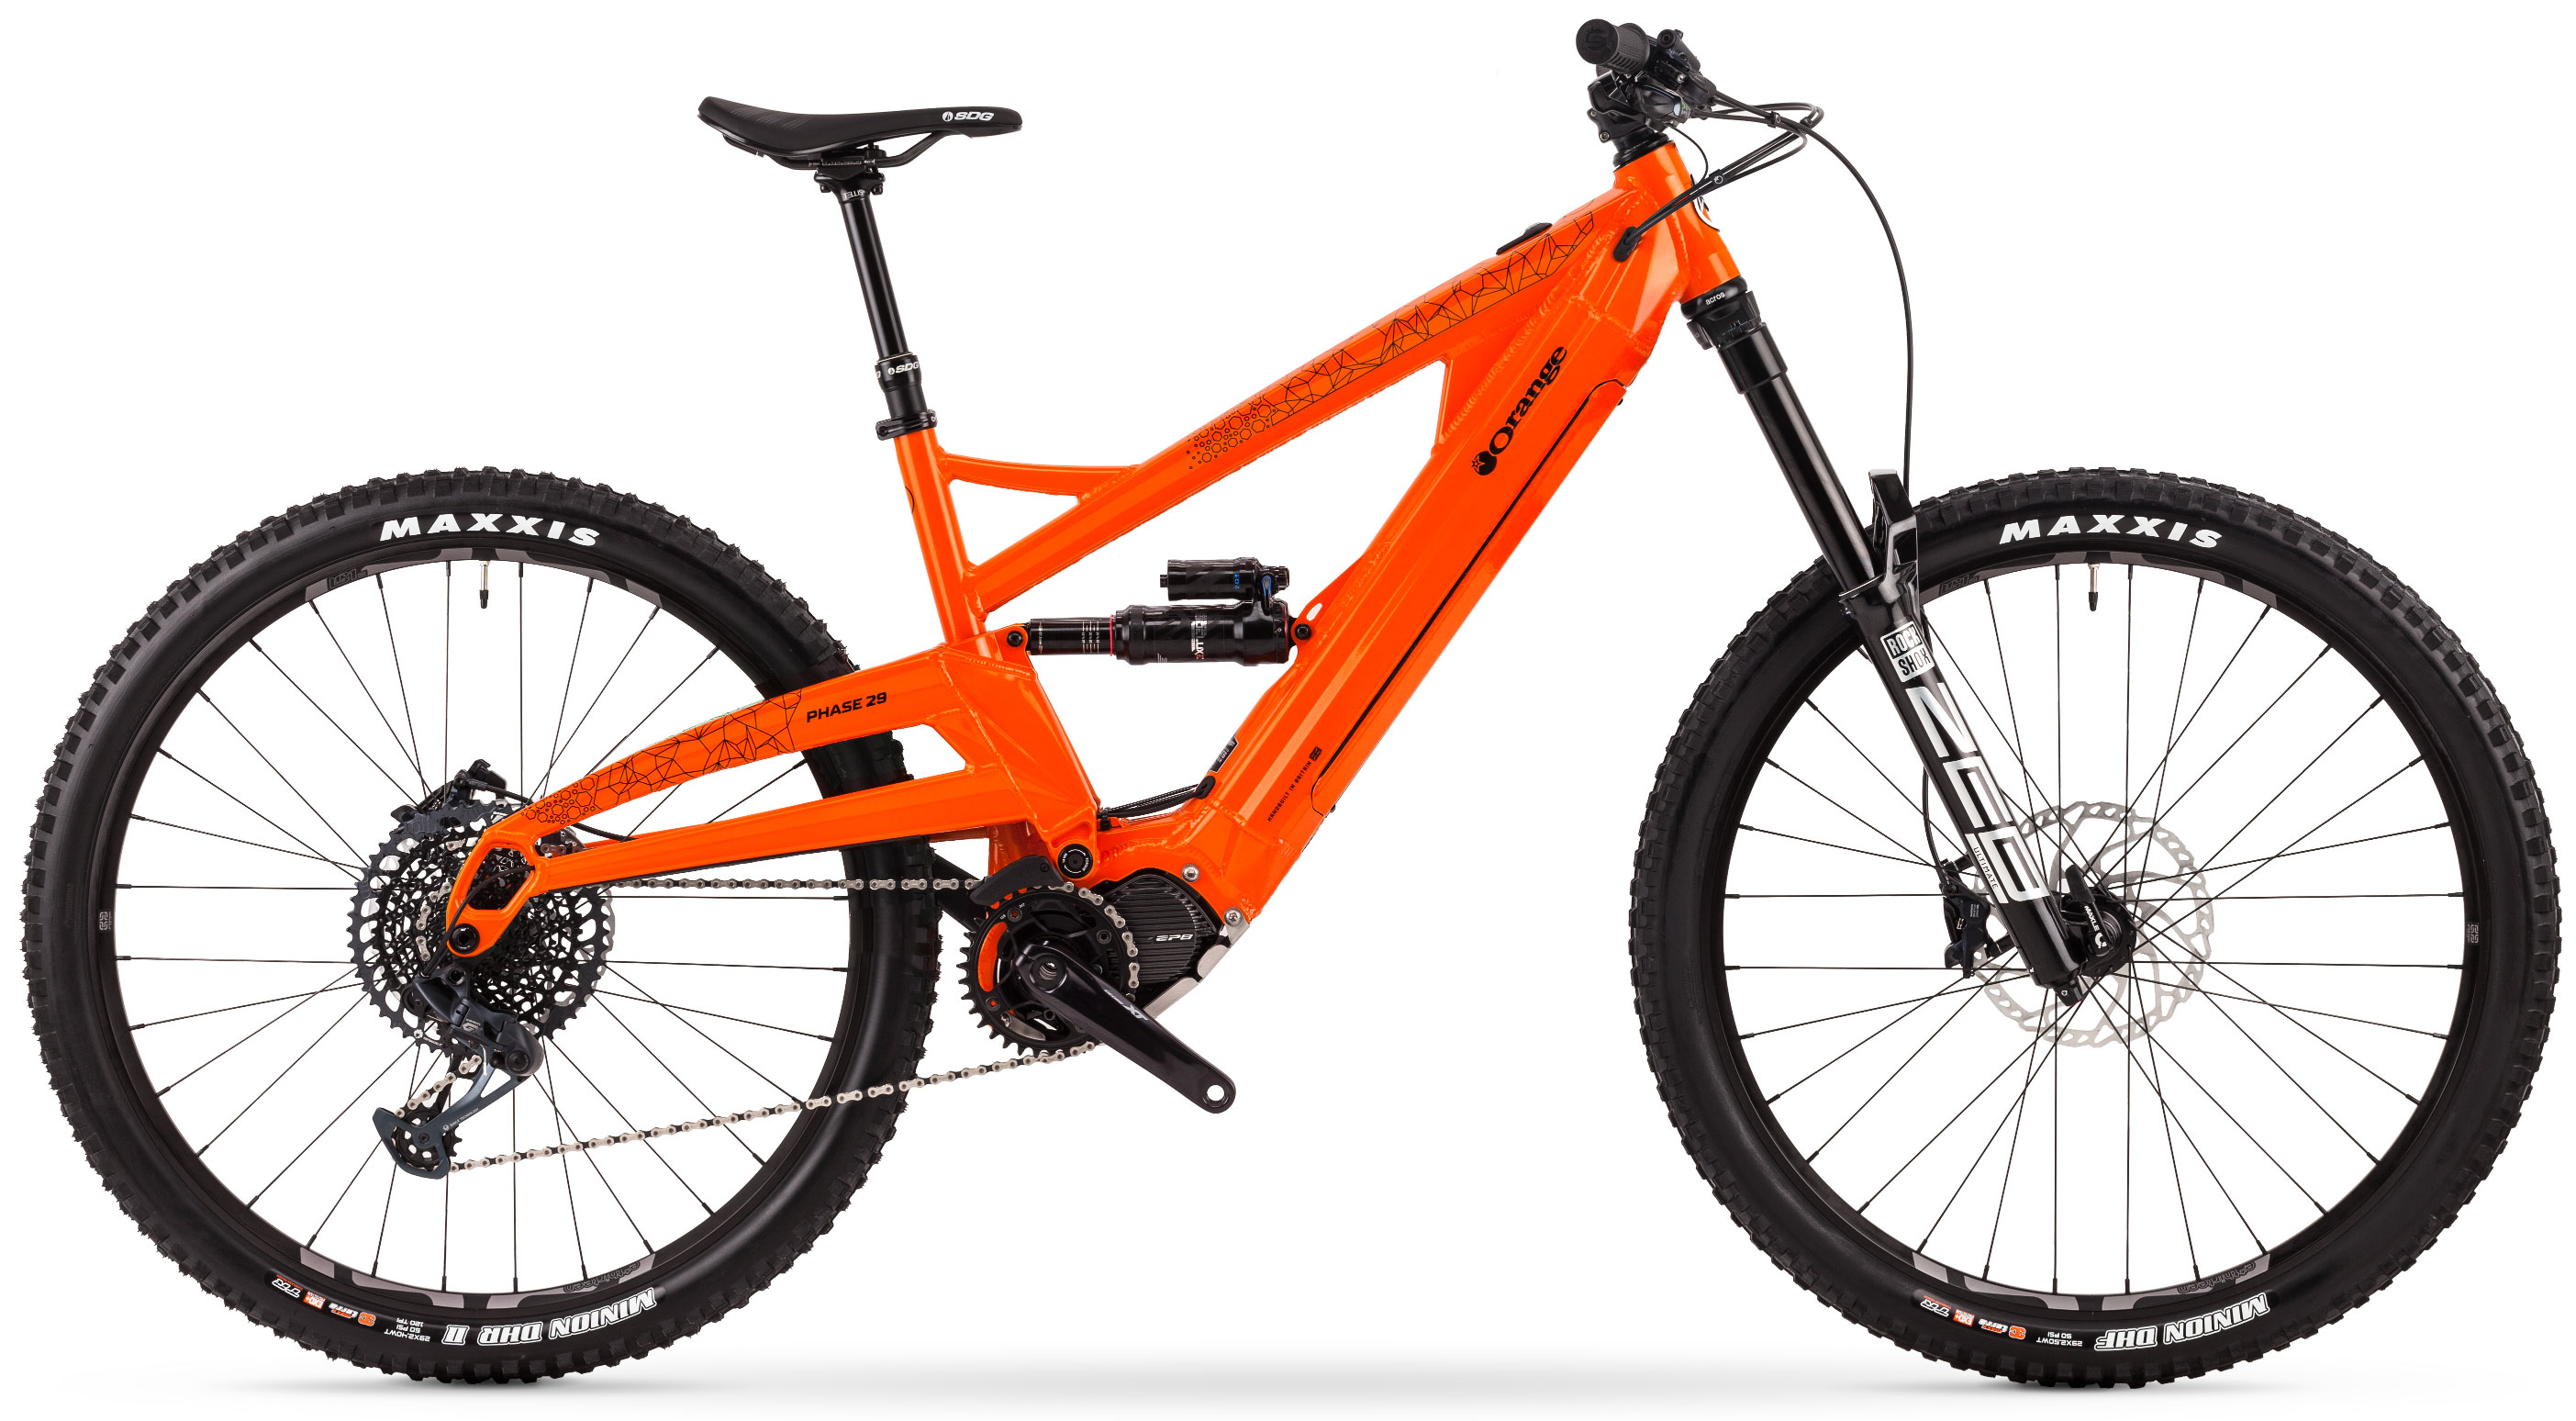 Phase 29 RS | Orange Bikes